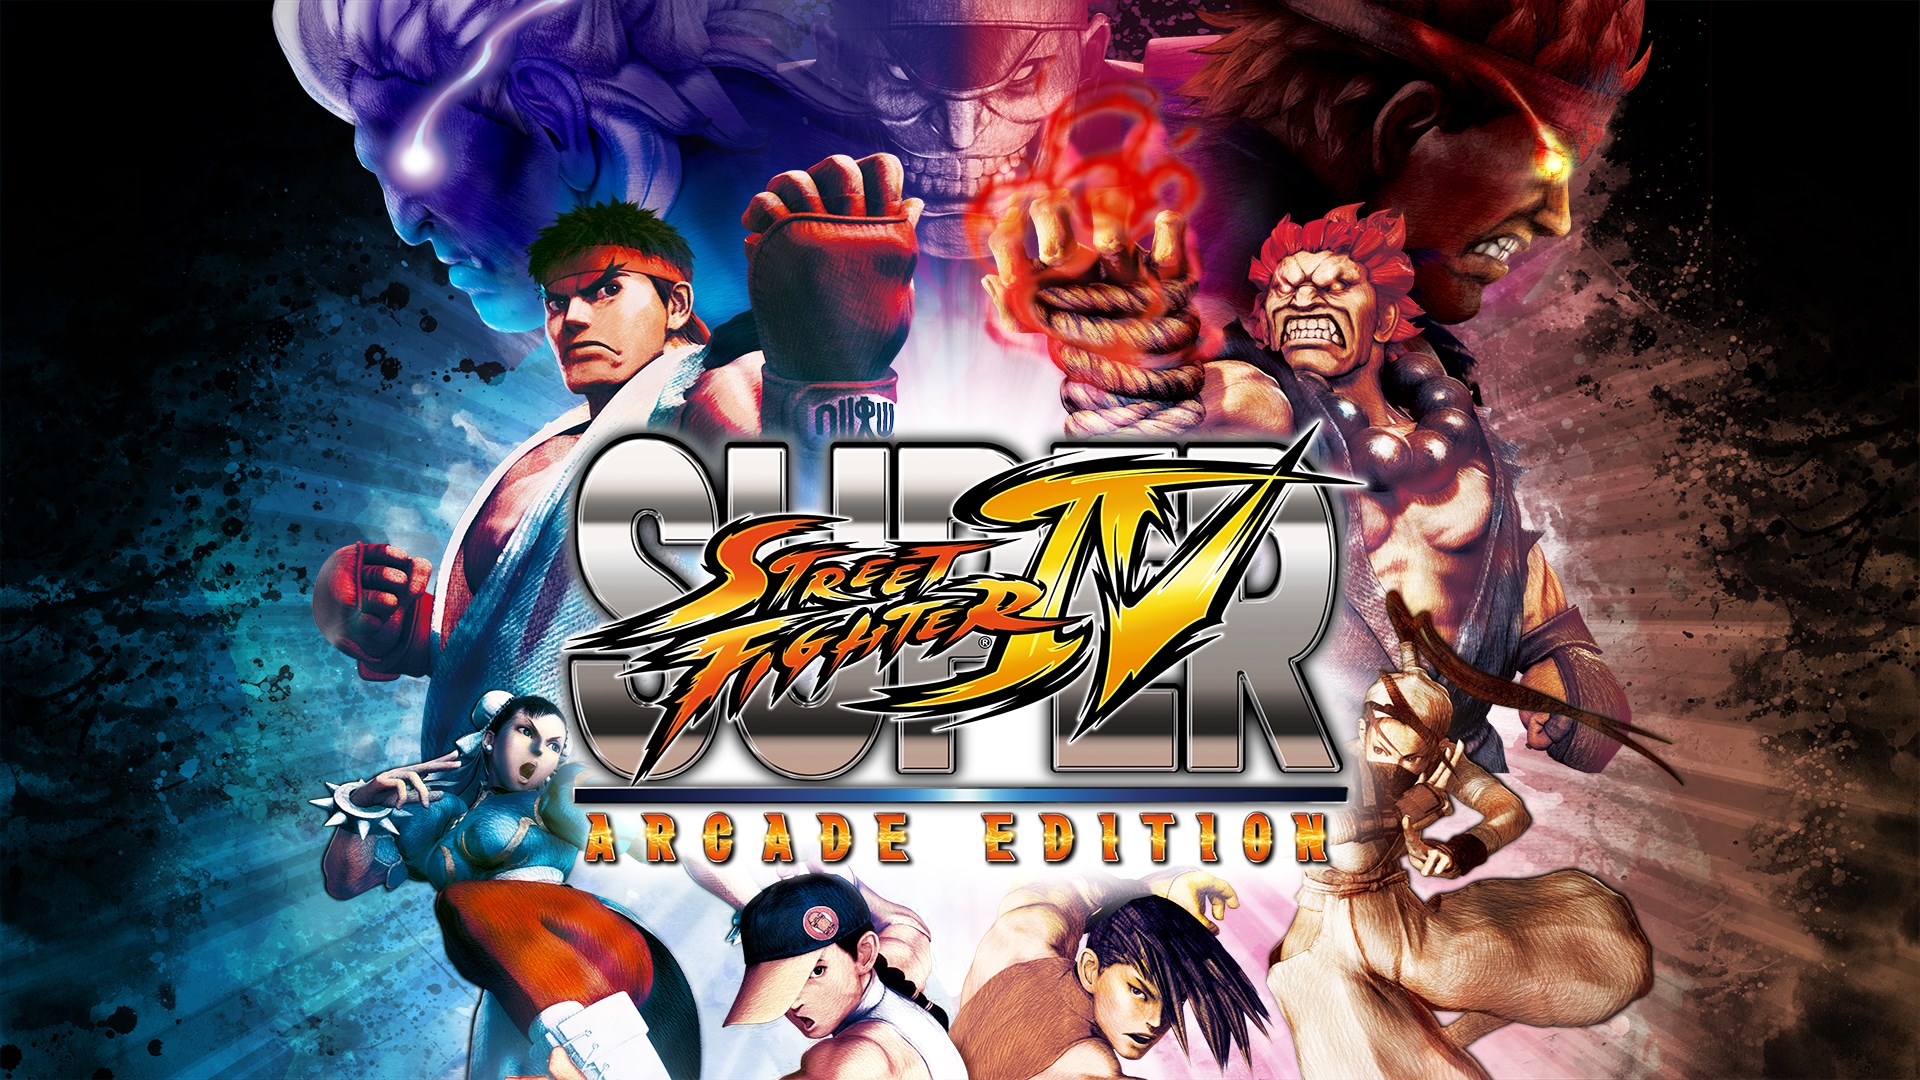 super street fighter iv arcade edition pc download